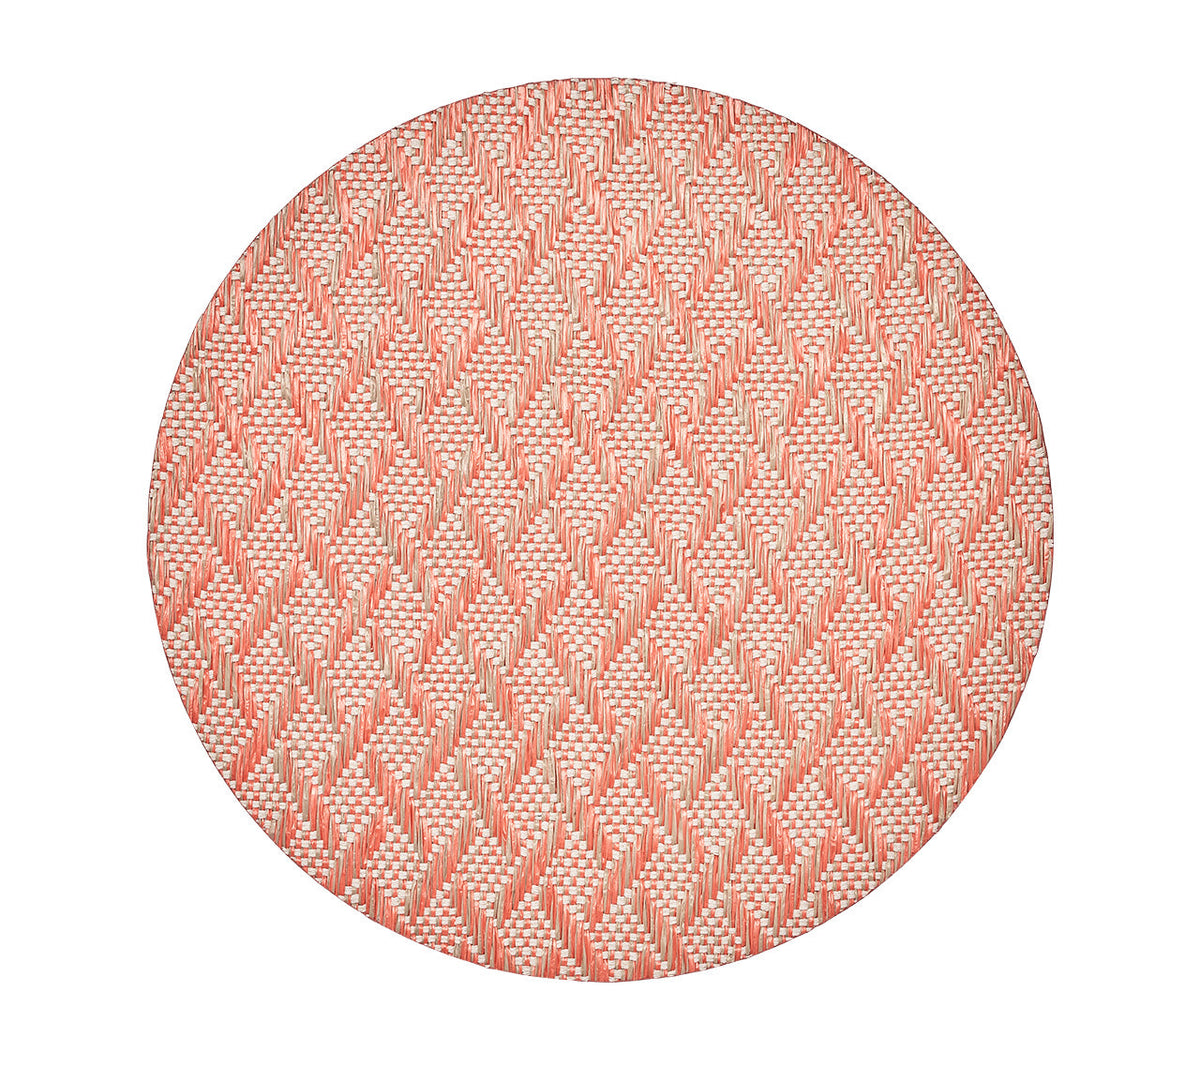 Round Basketweave Placemat in orange